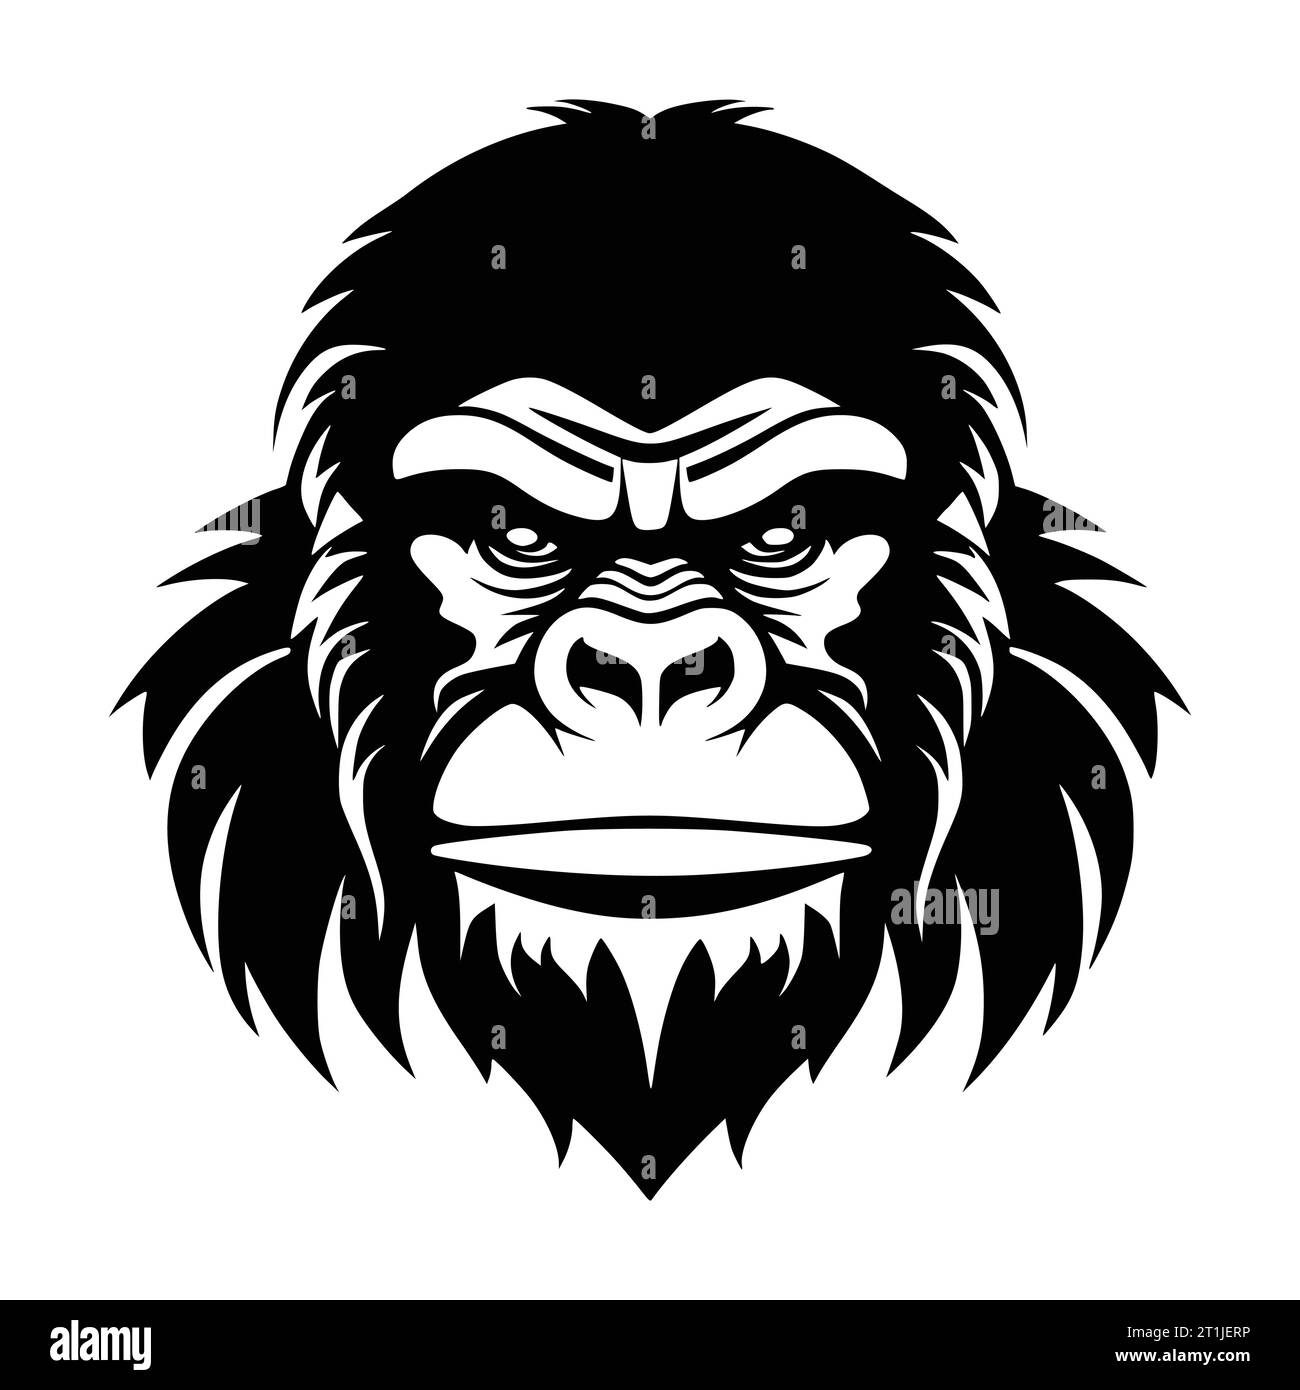 gorill wild animal head logo and symbol illustration Stock Vector